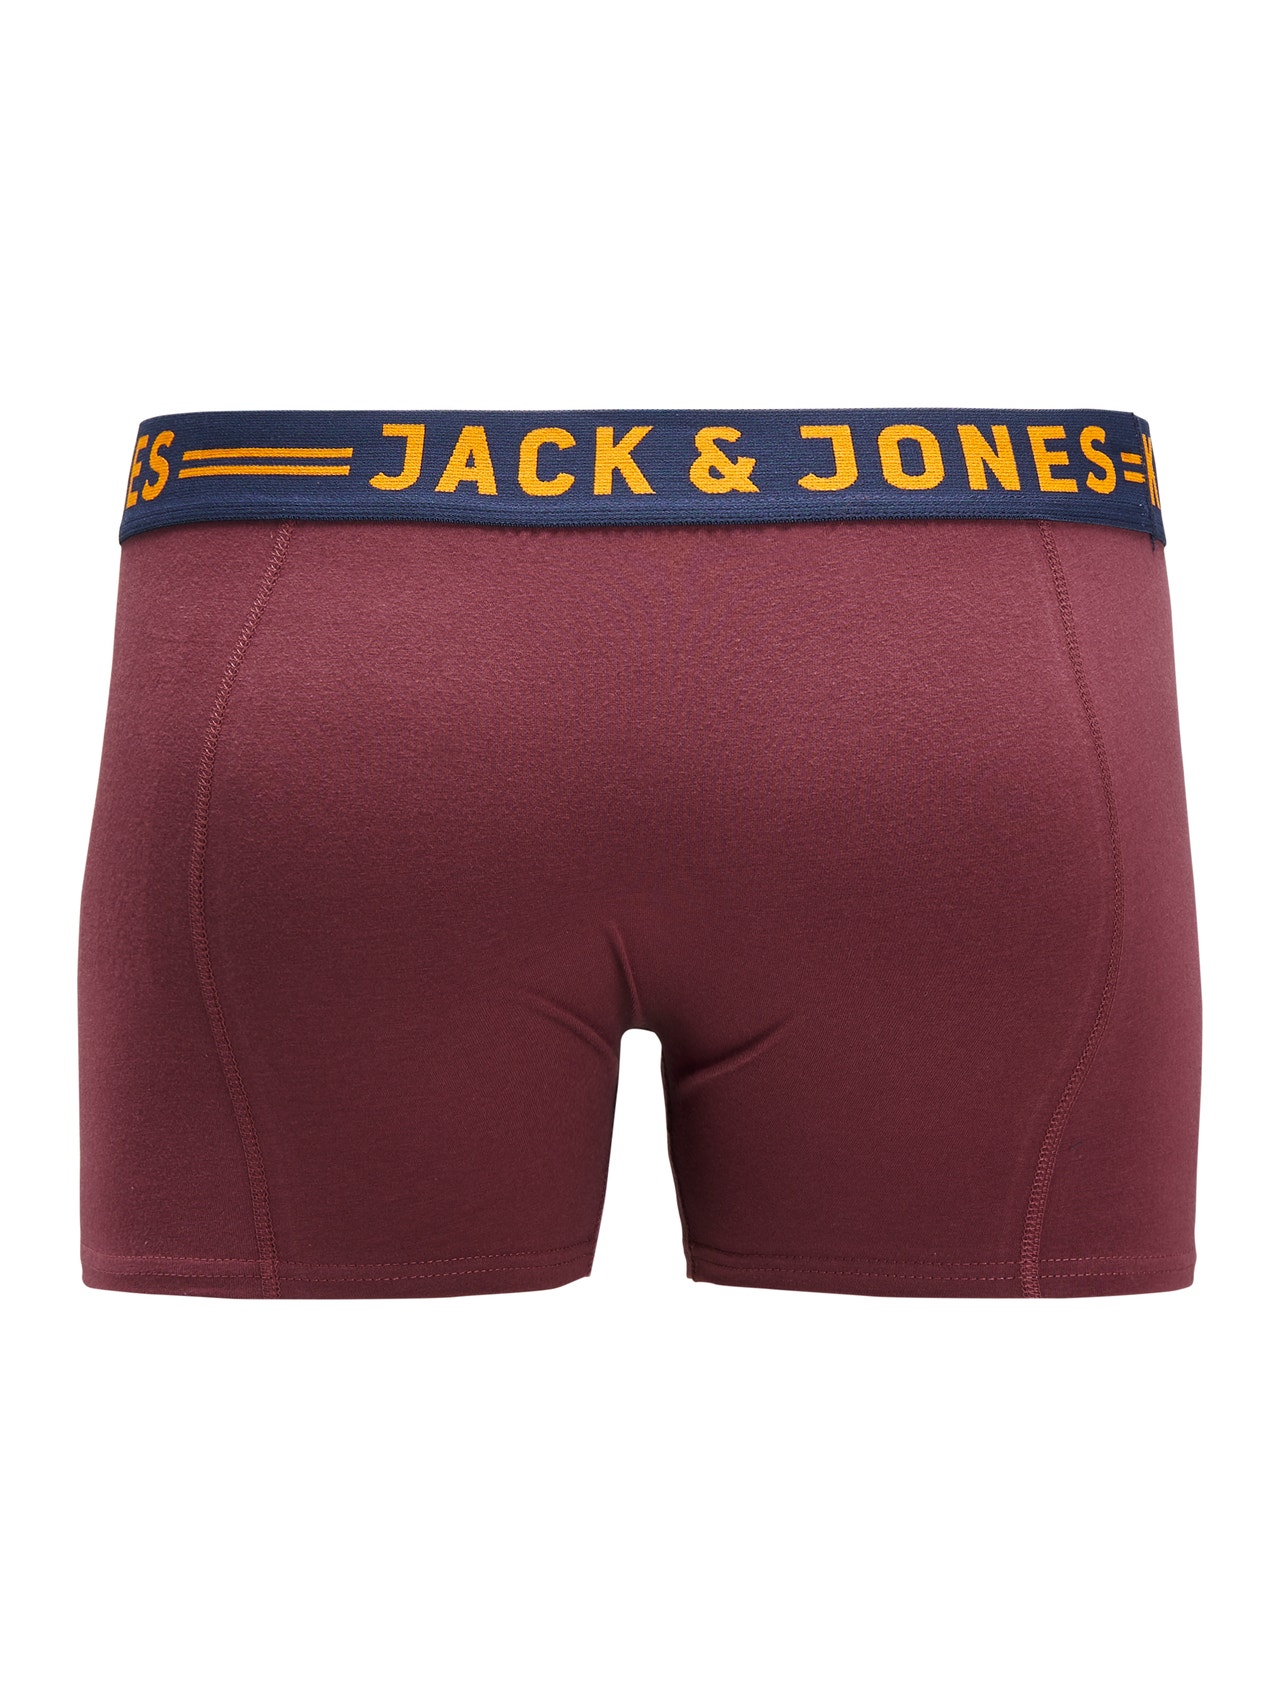 Jack & Jones Plus 3 Trunks -Burgundy - 12147592